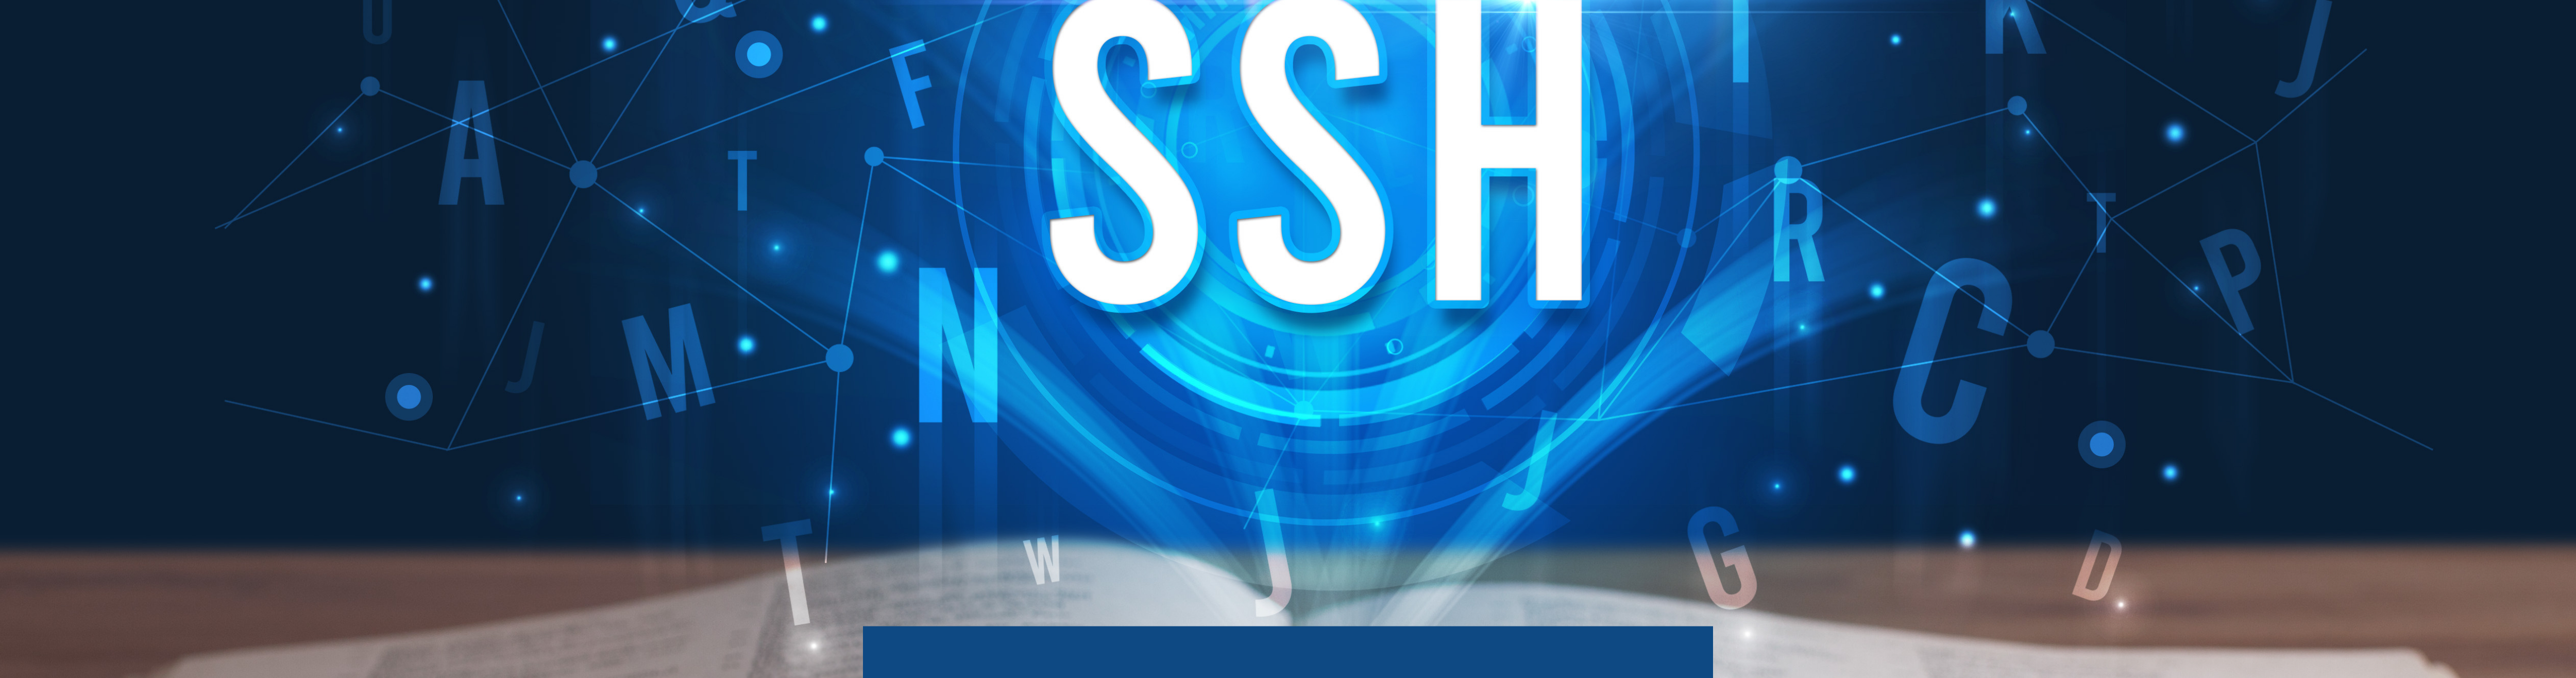 SSH Summer School: jump hosts and file transferring hero image